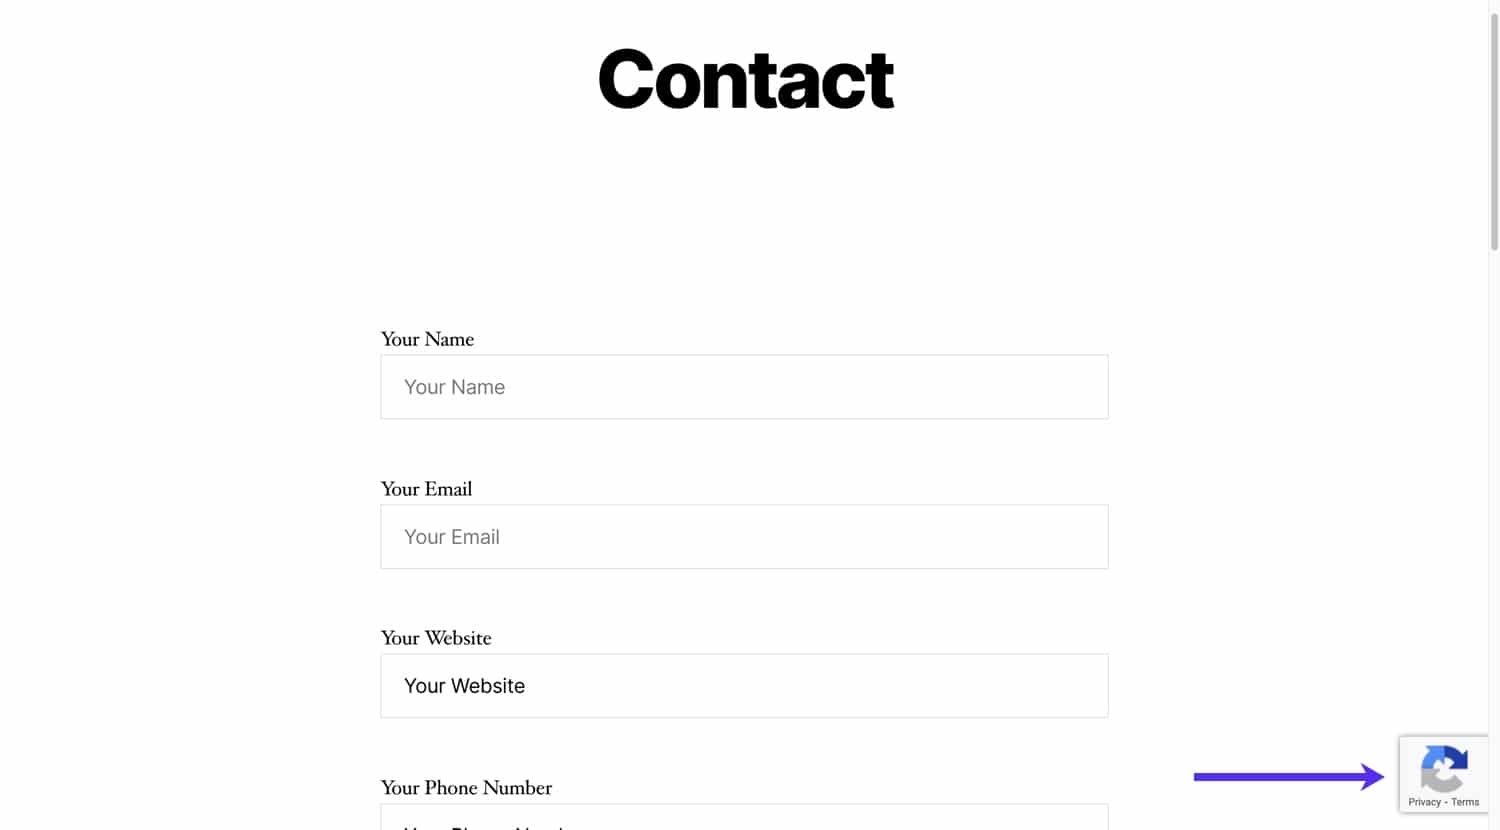 Contact form de WordPress protegido por reCAPTCHA V3.